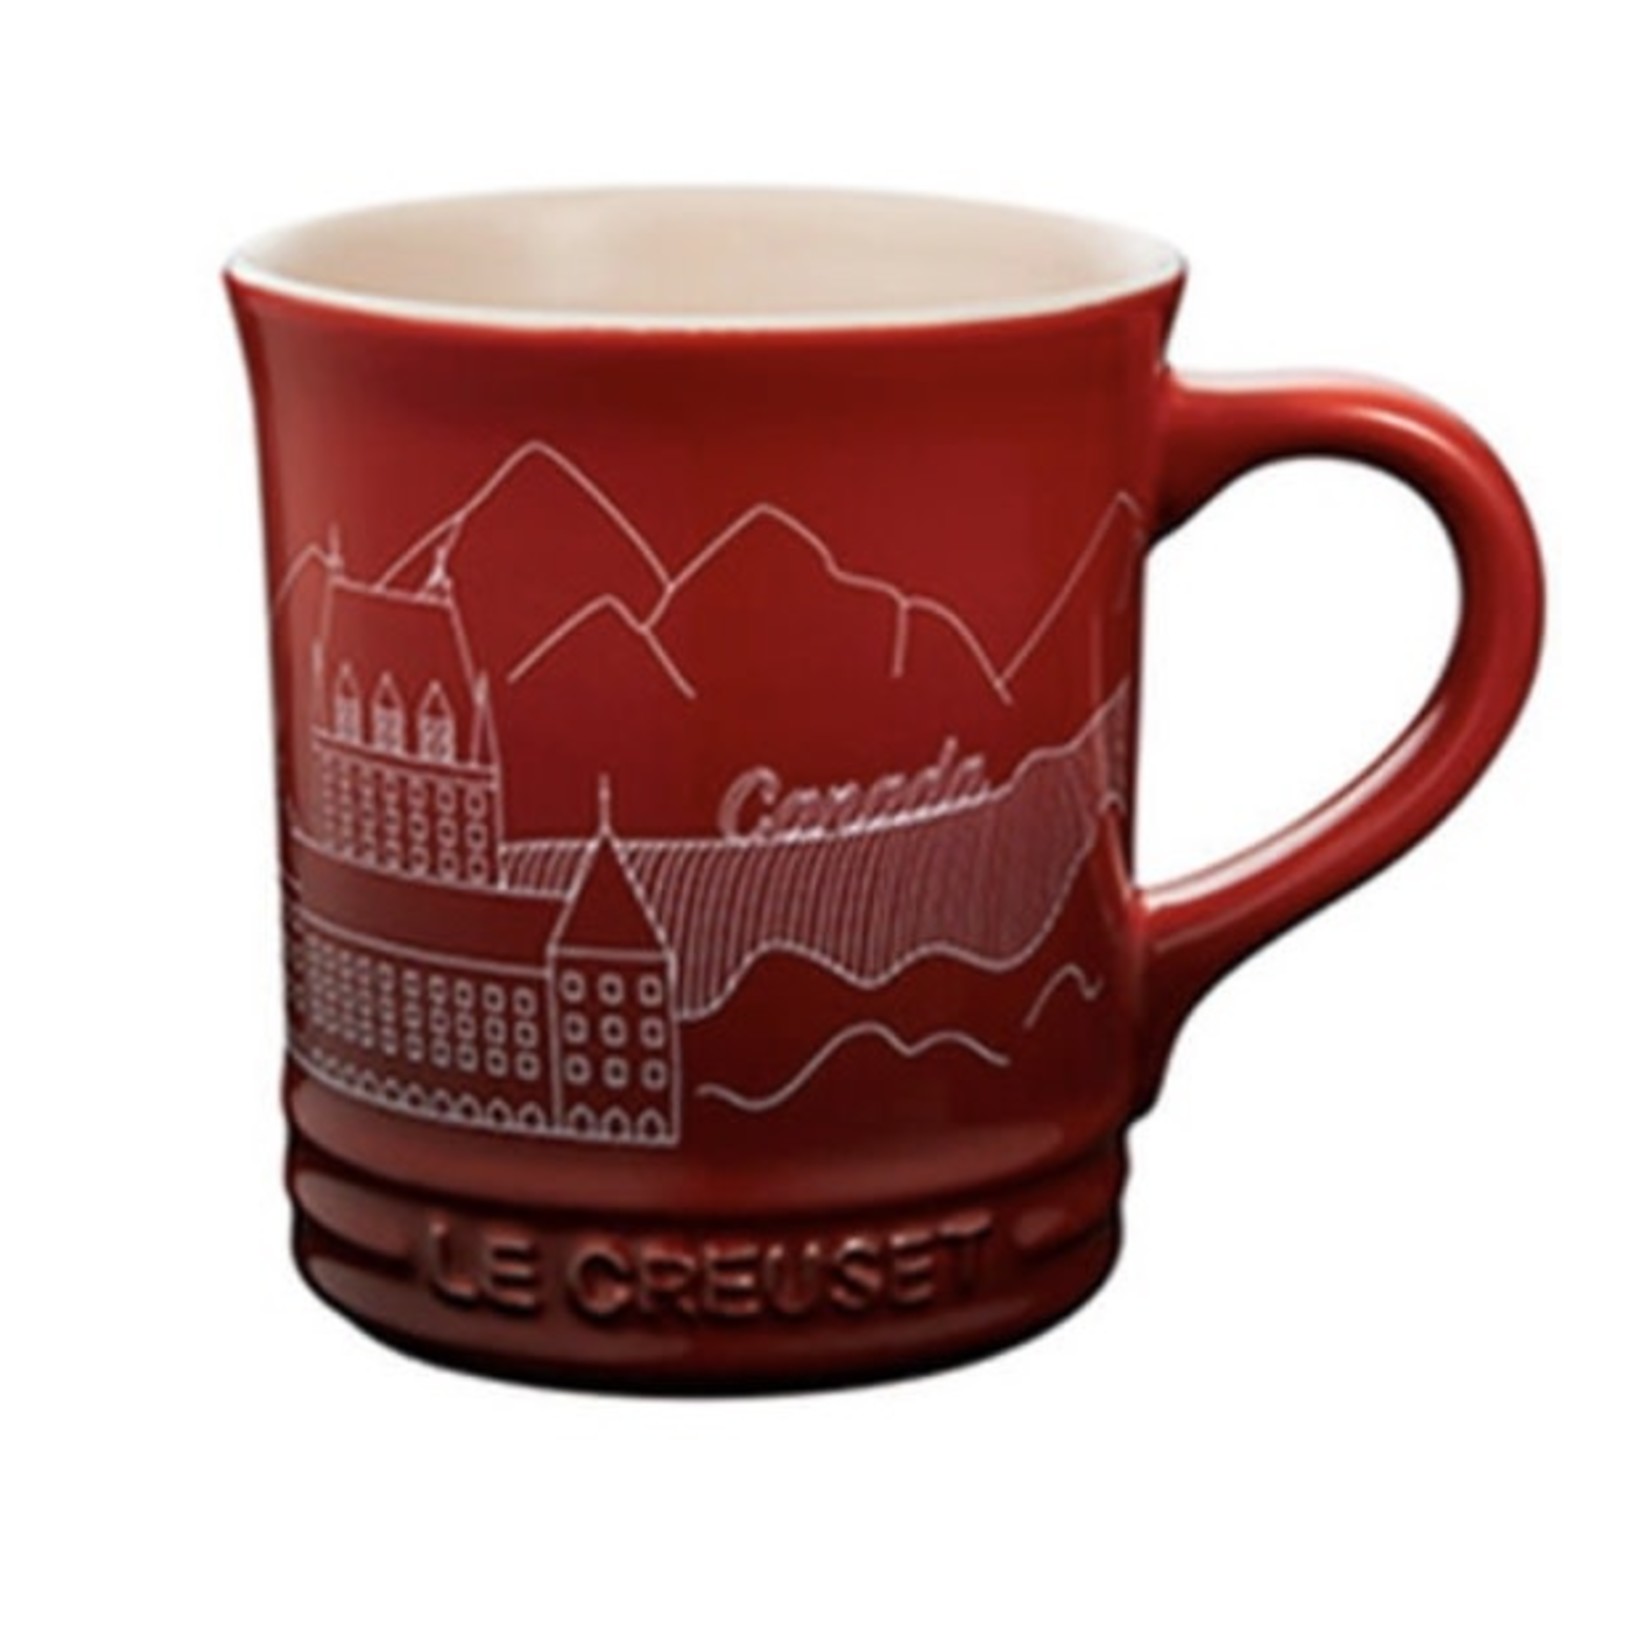 LE CREUSET LE CREUSET Classic Mug Canada - Cherry REG $36